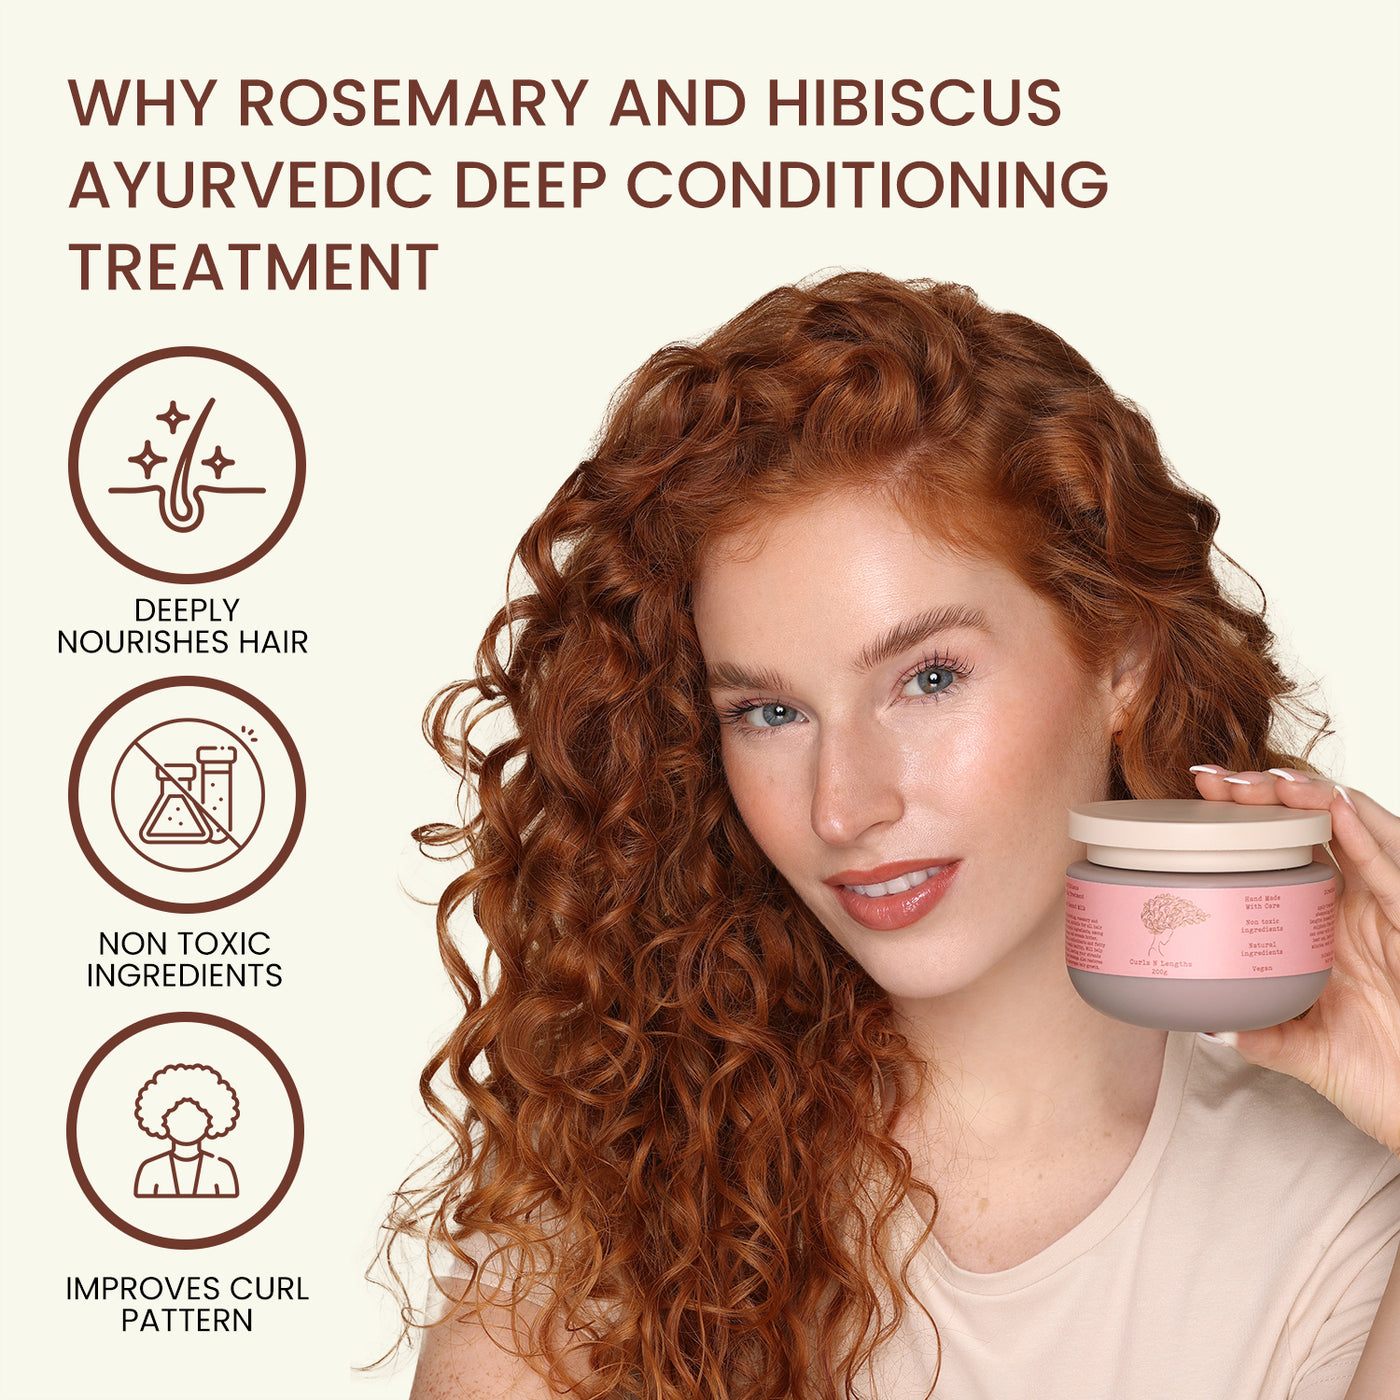 Rosemary and Hibiscus Ayurvedic Deep Conditioning Treatment